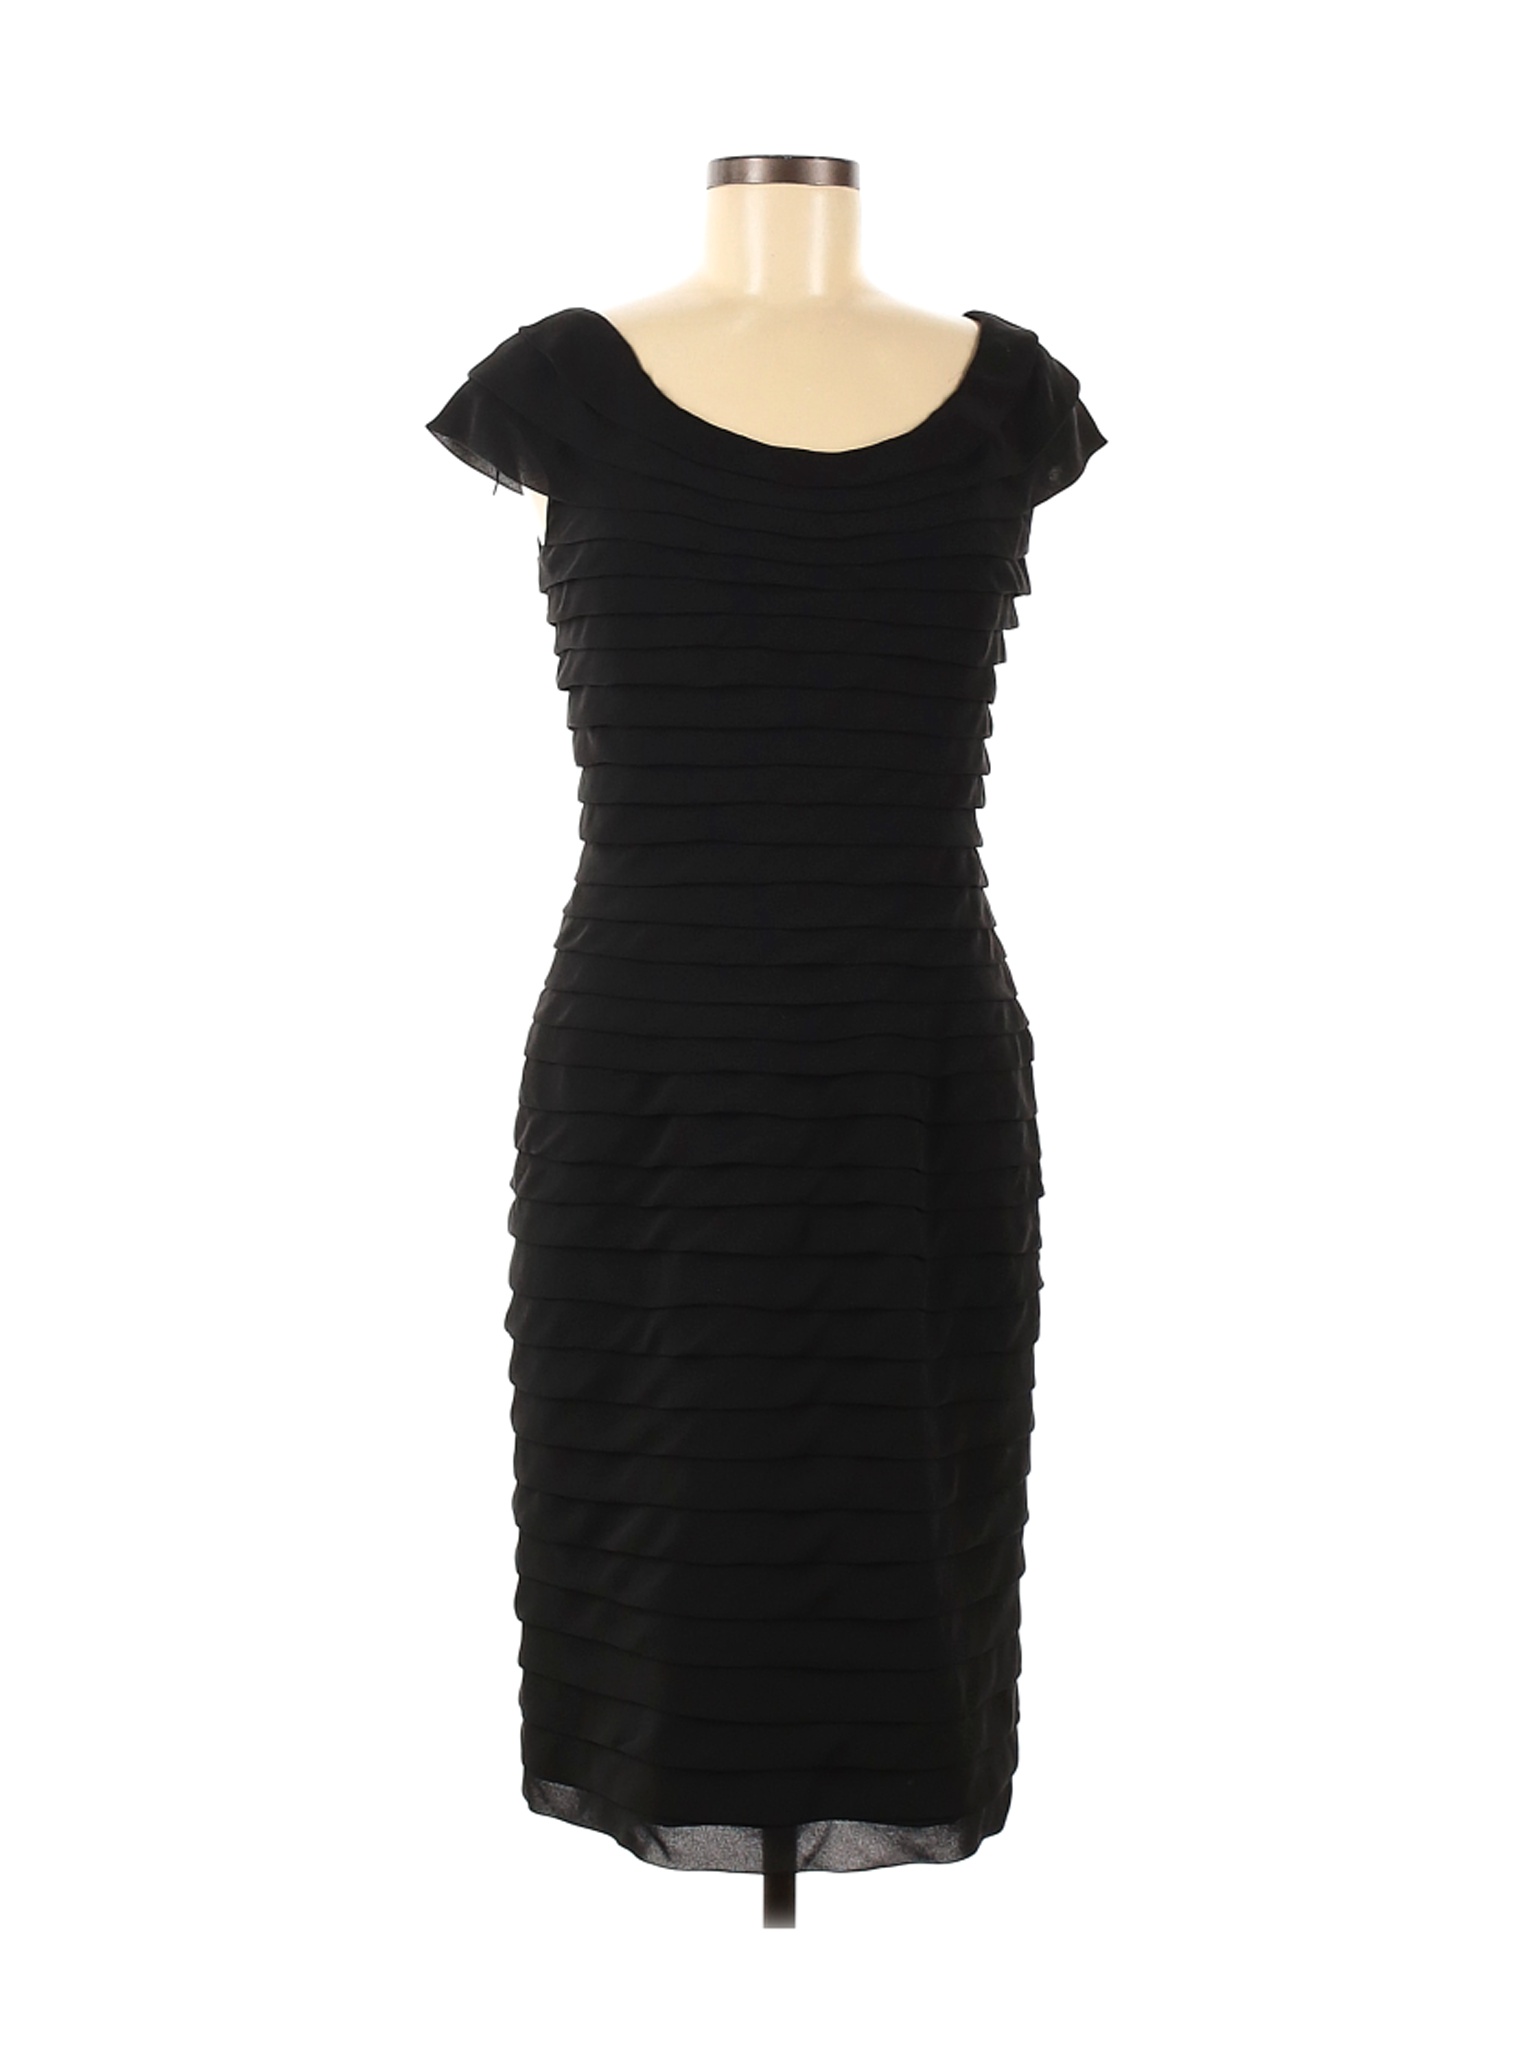 Adrianna Papell Women Black Casual Dress 6 | eBay